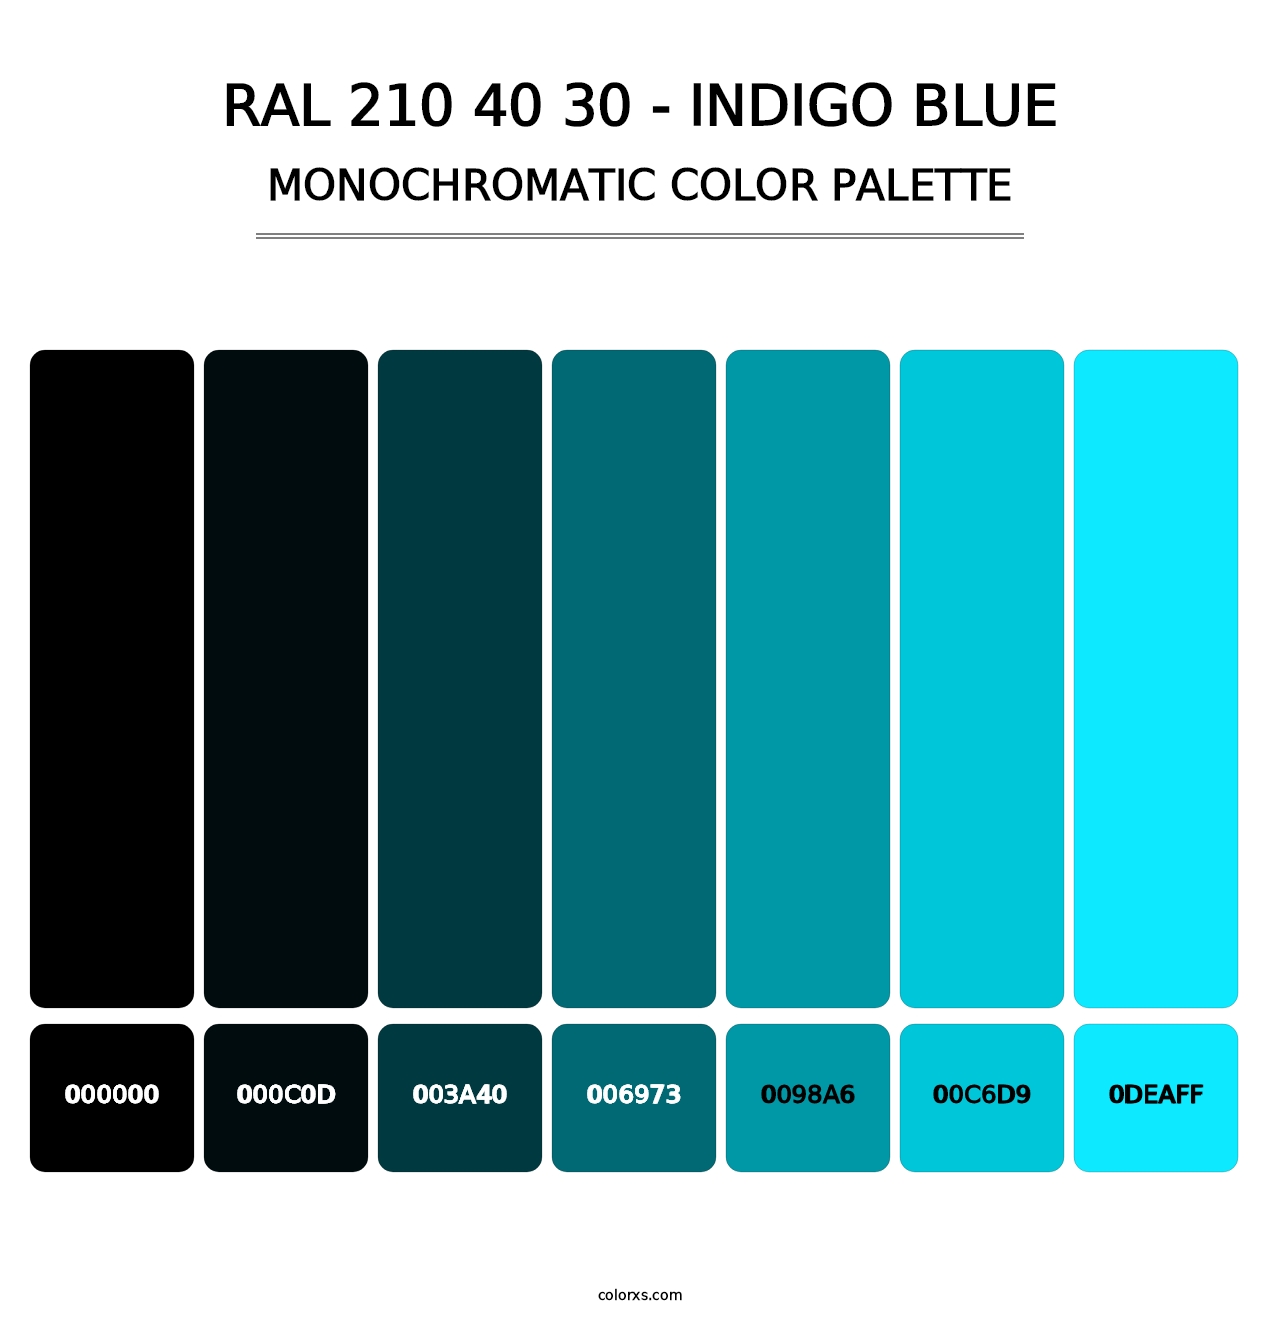 RAL 210 40 30 - Indigo Blue - Monochromatic Color Palette